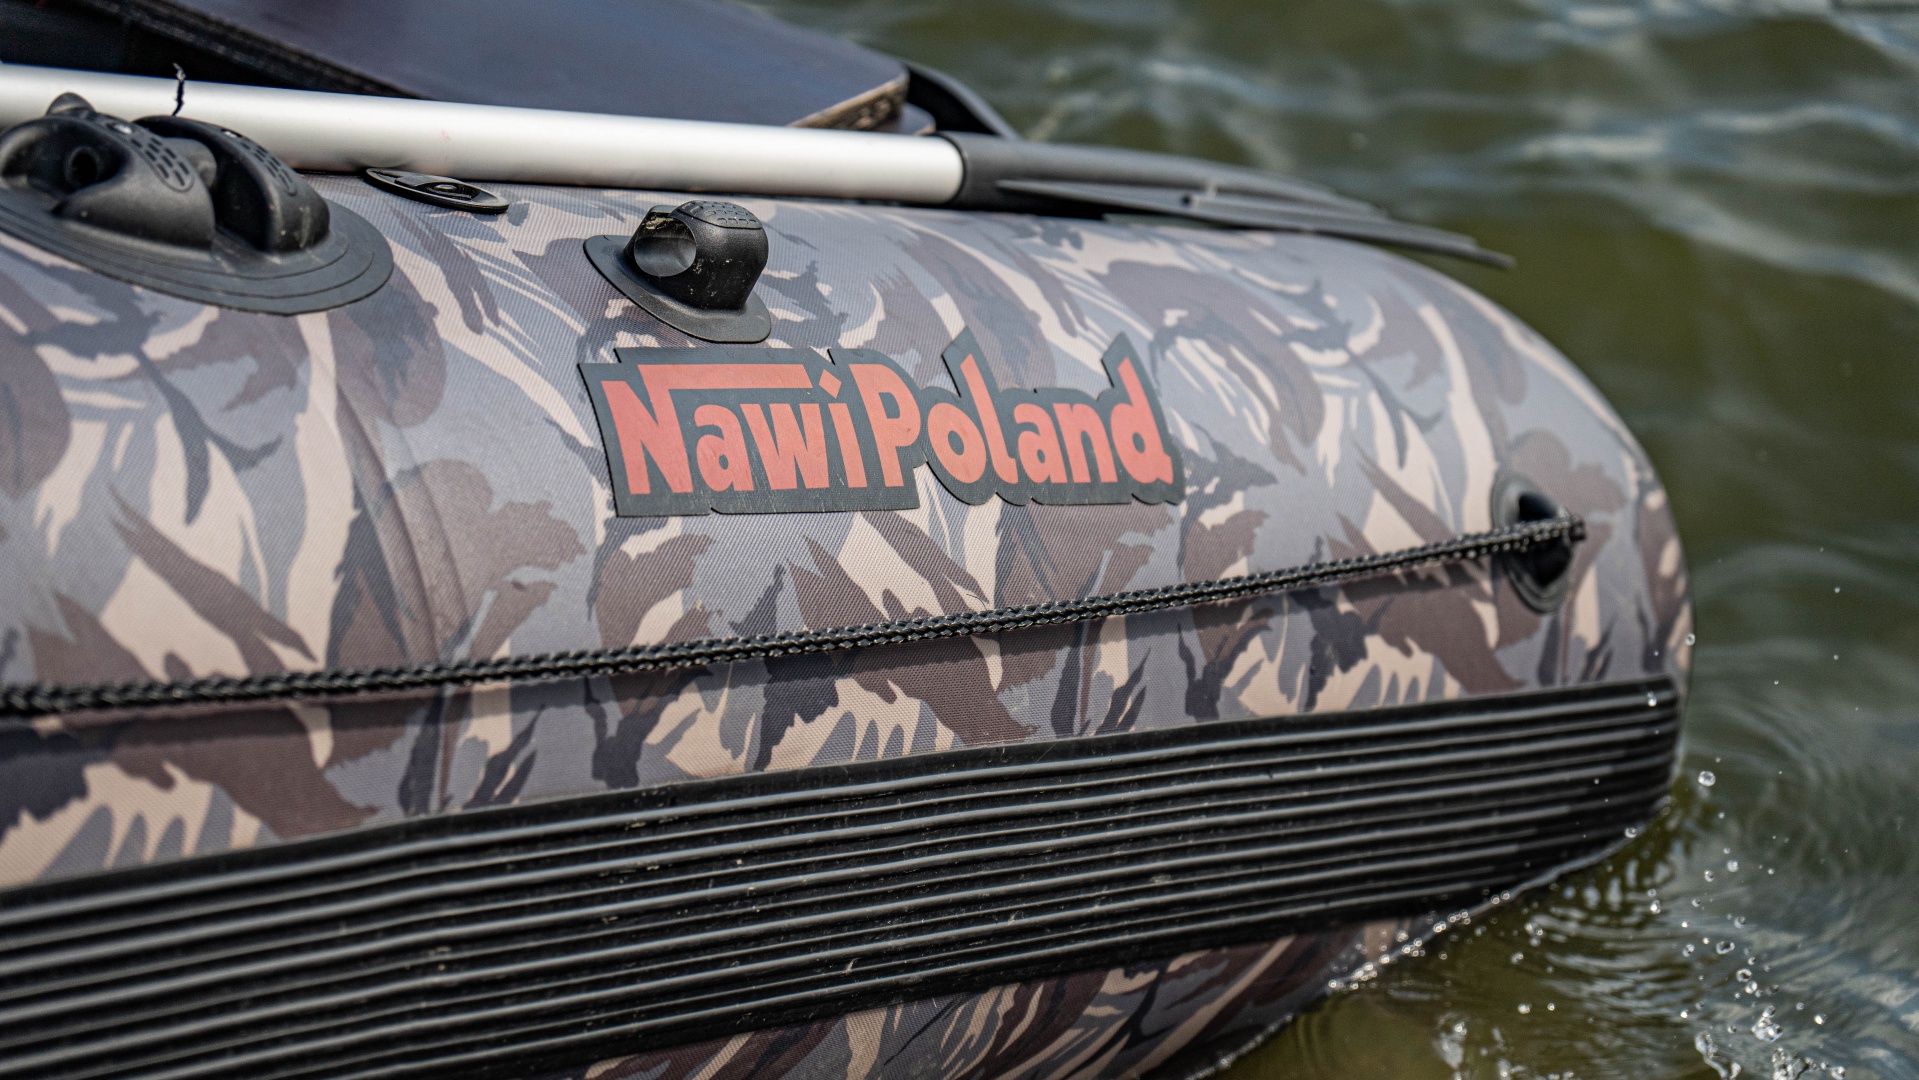 NawiPoland CAT 280 Inflatable Boat  - Katamaranas